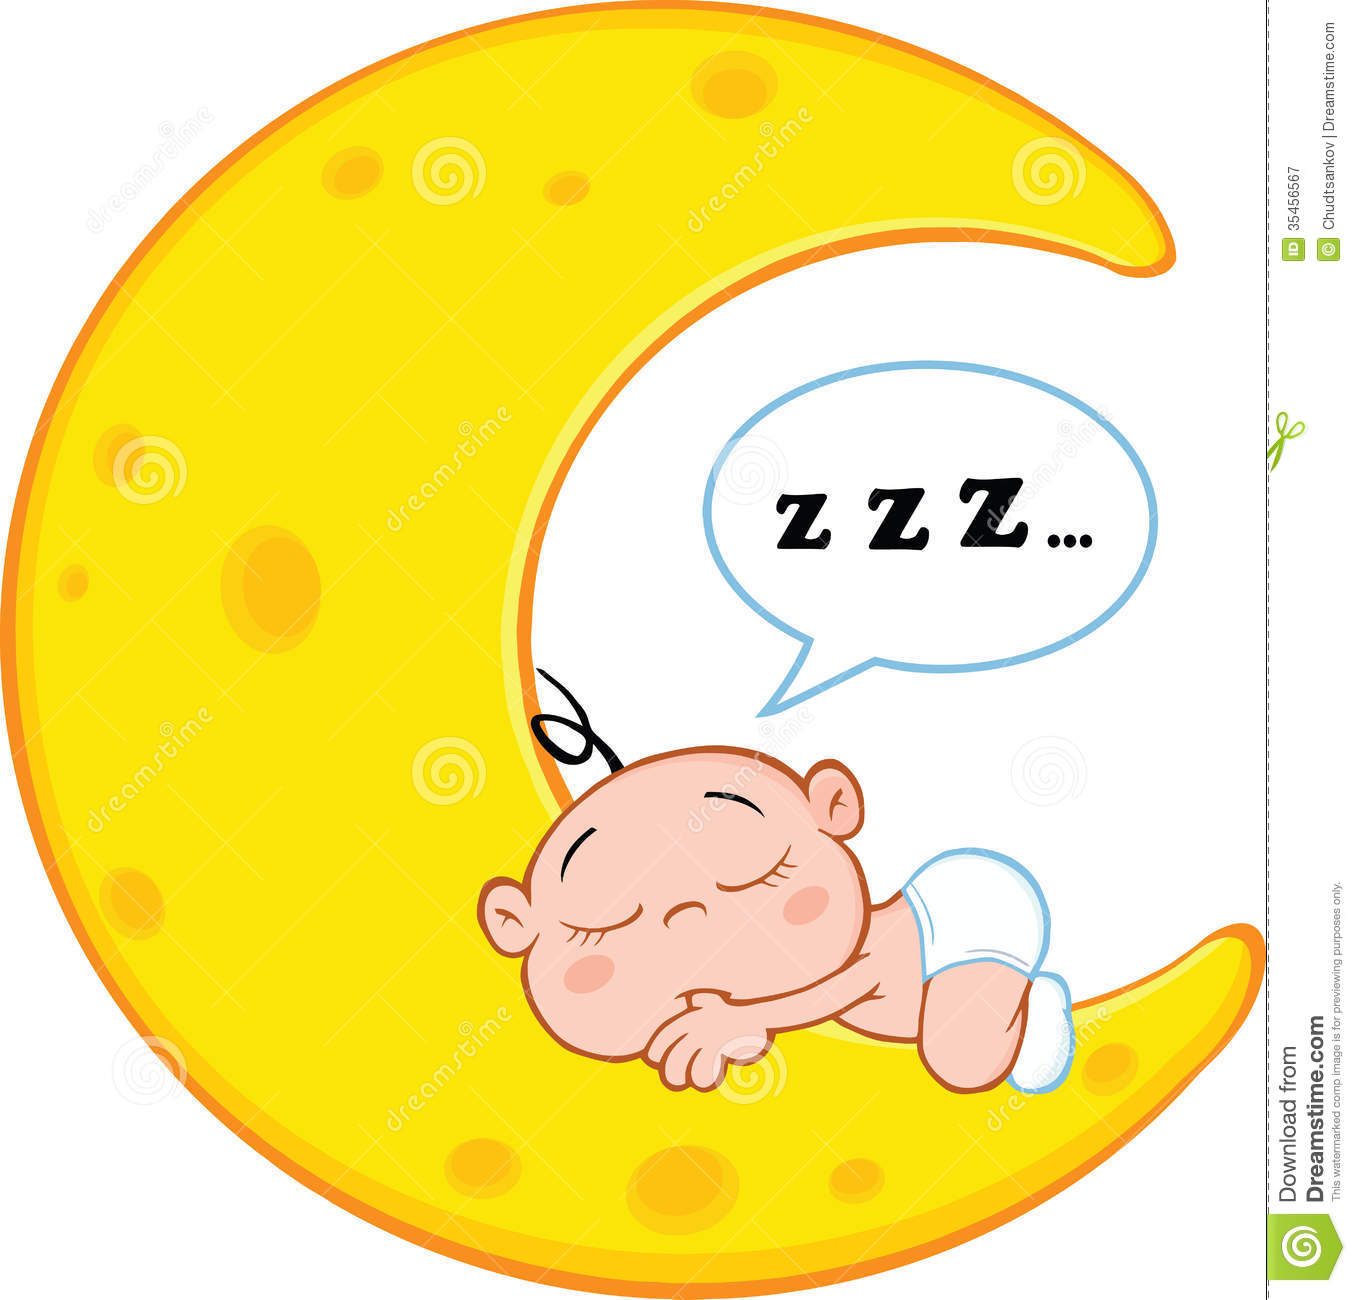 Cute Baby Boy Sleeps On Moon With Speech Bubble Royalty Free Stock